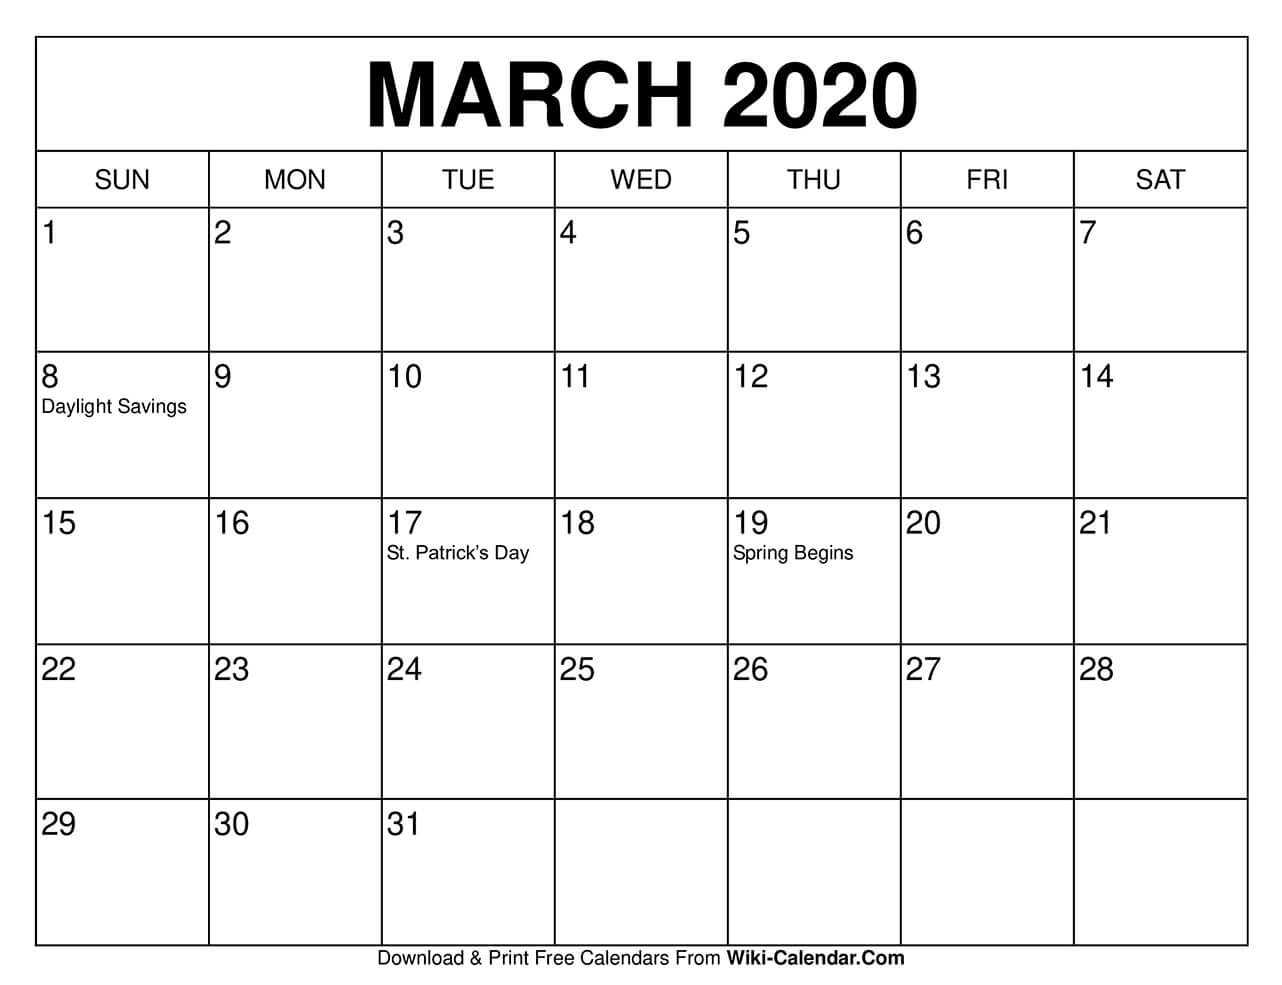 march 2021 printable calendar wiki Free Printable March 2020 Calendars march 2021 printable calendar wiki